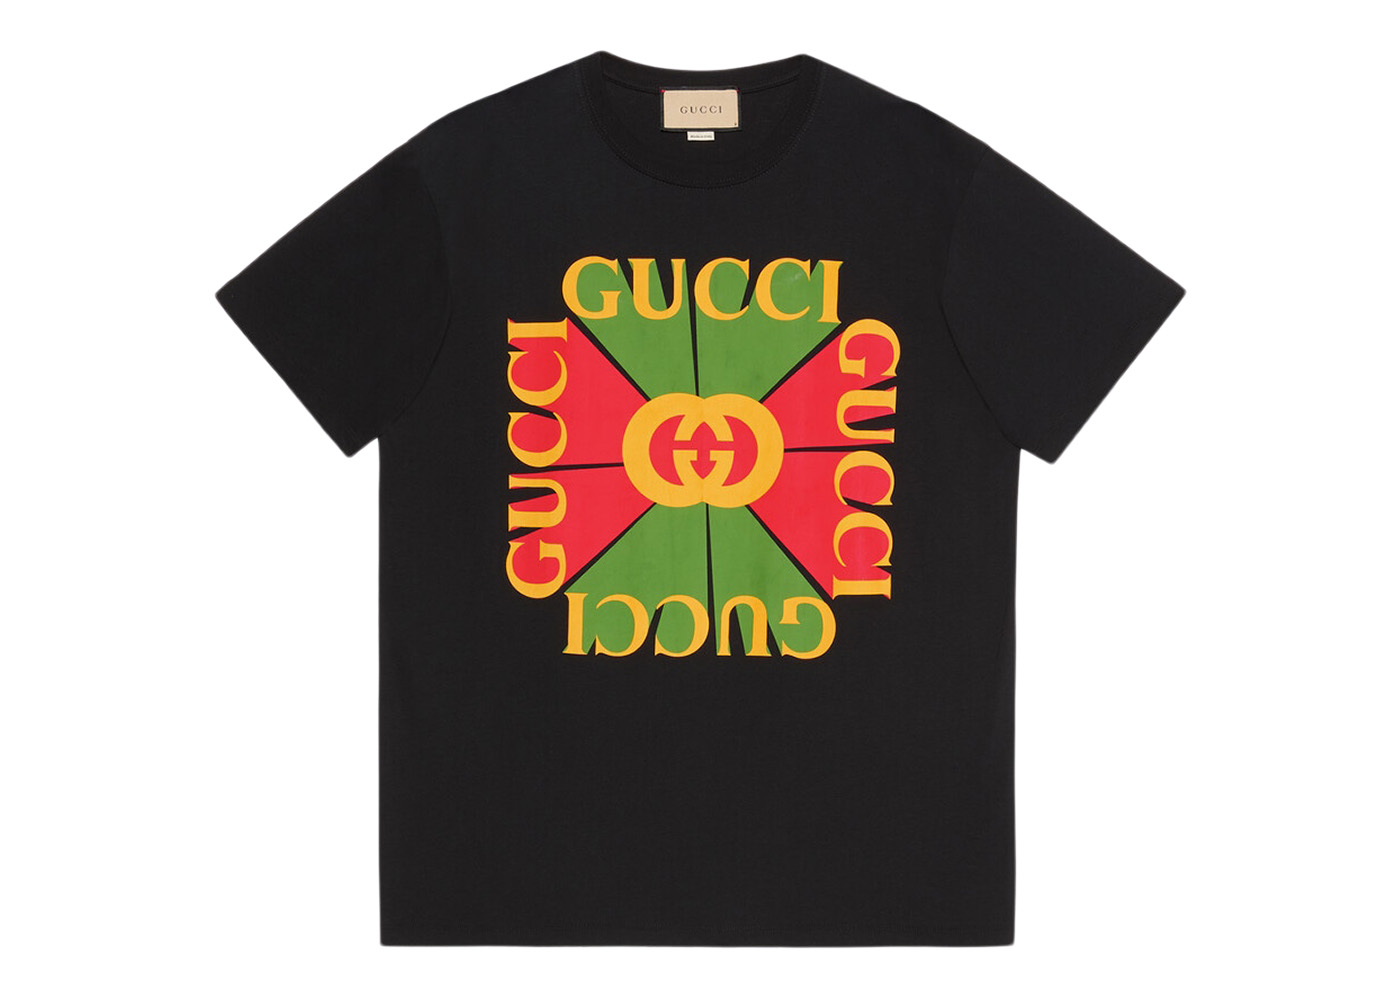 Gucci Women's Oversized Vintage Logo Print T-Shirt Black/Green/Red